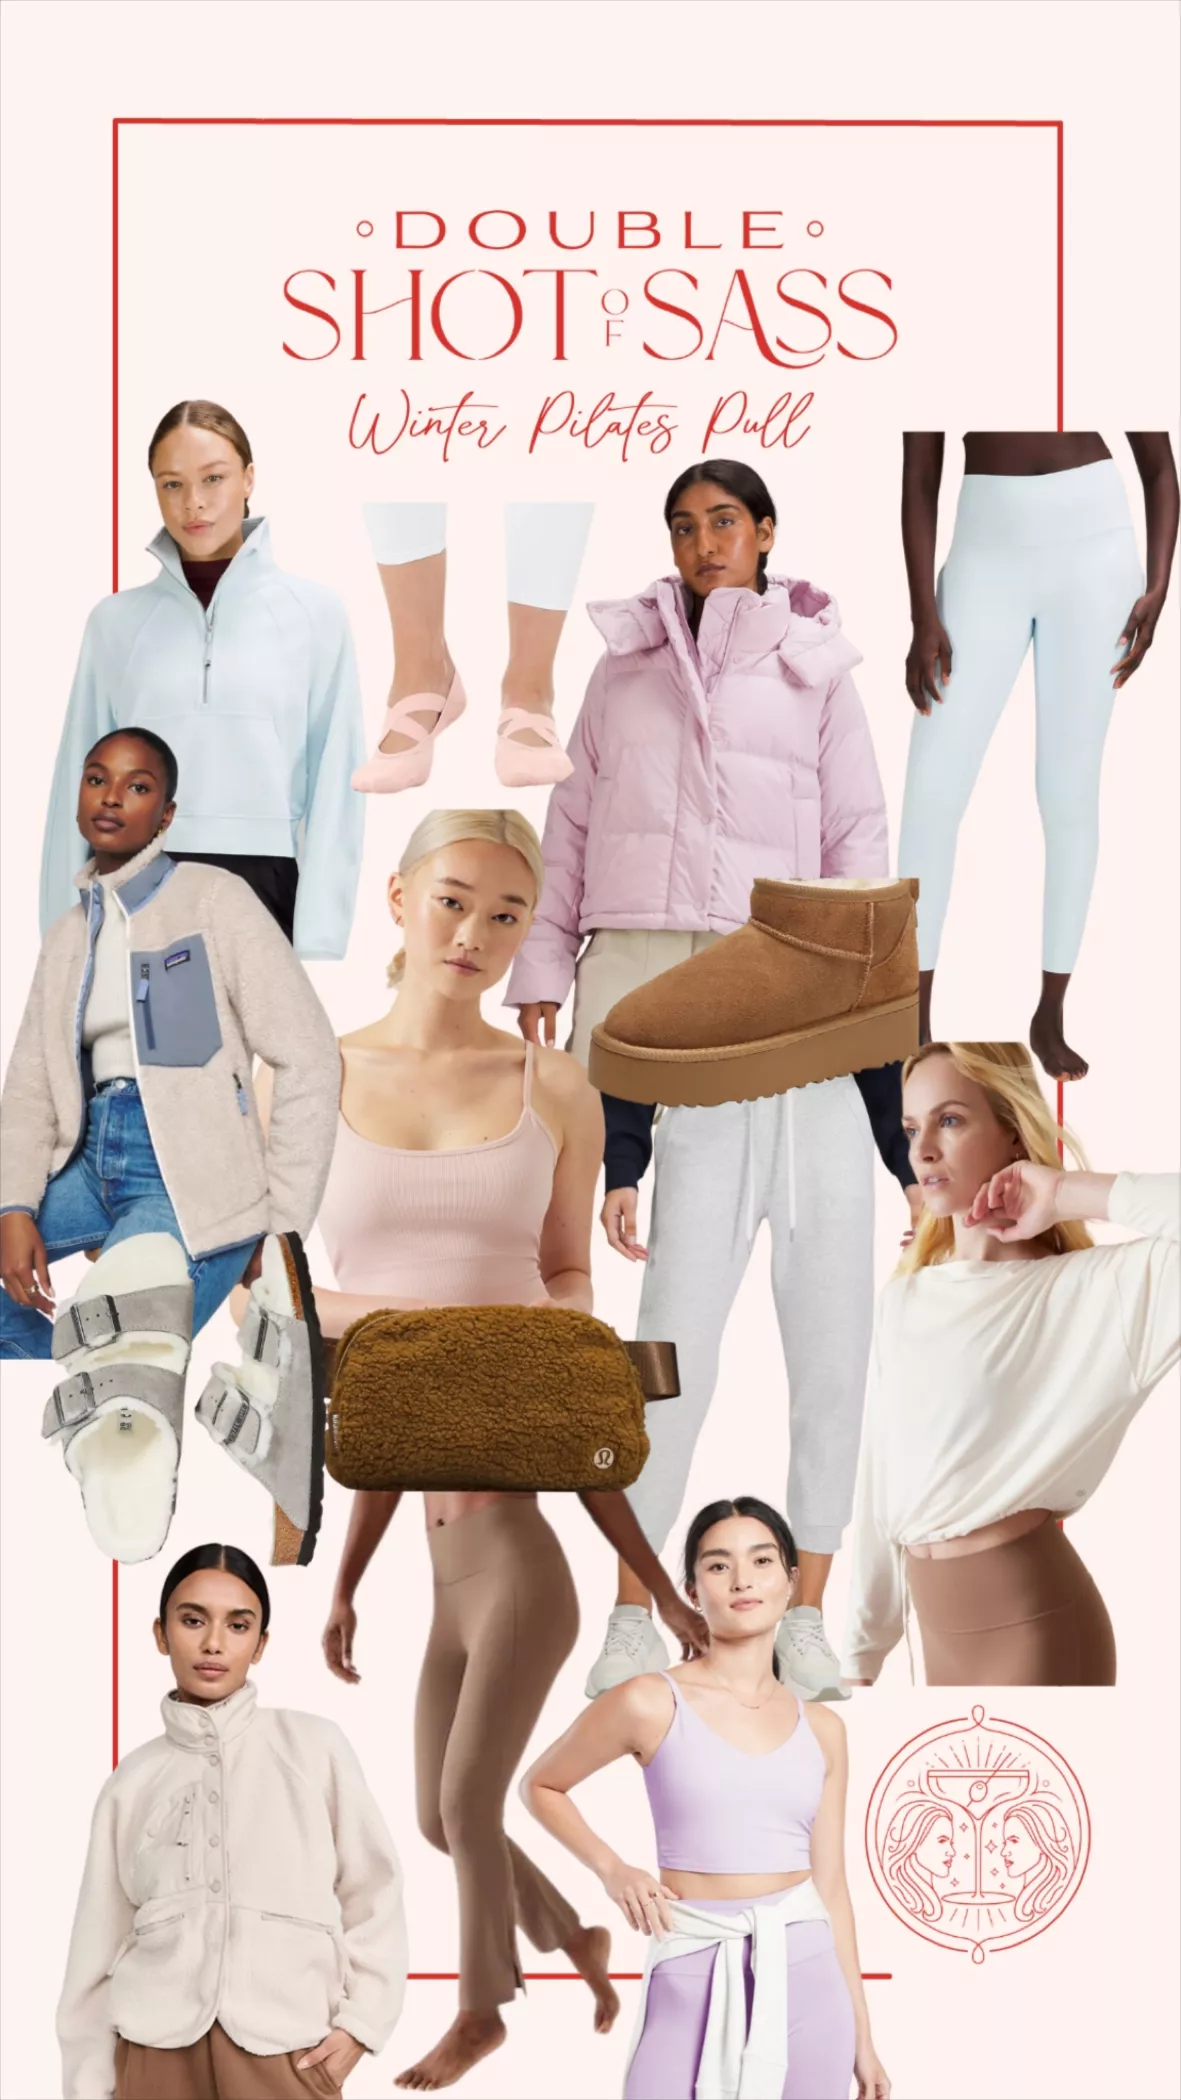 Women's Pivot Barre Sock curated on LTK  Barre socks, Pure products, Yoga  barre